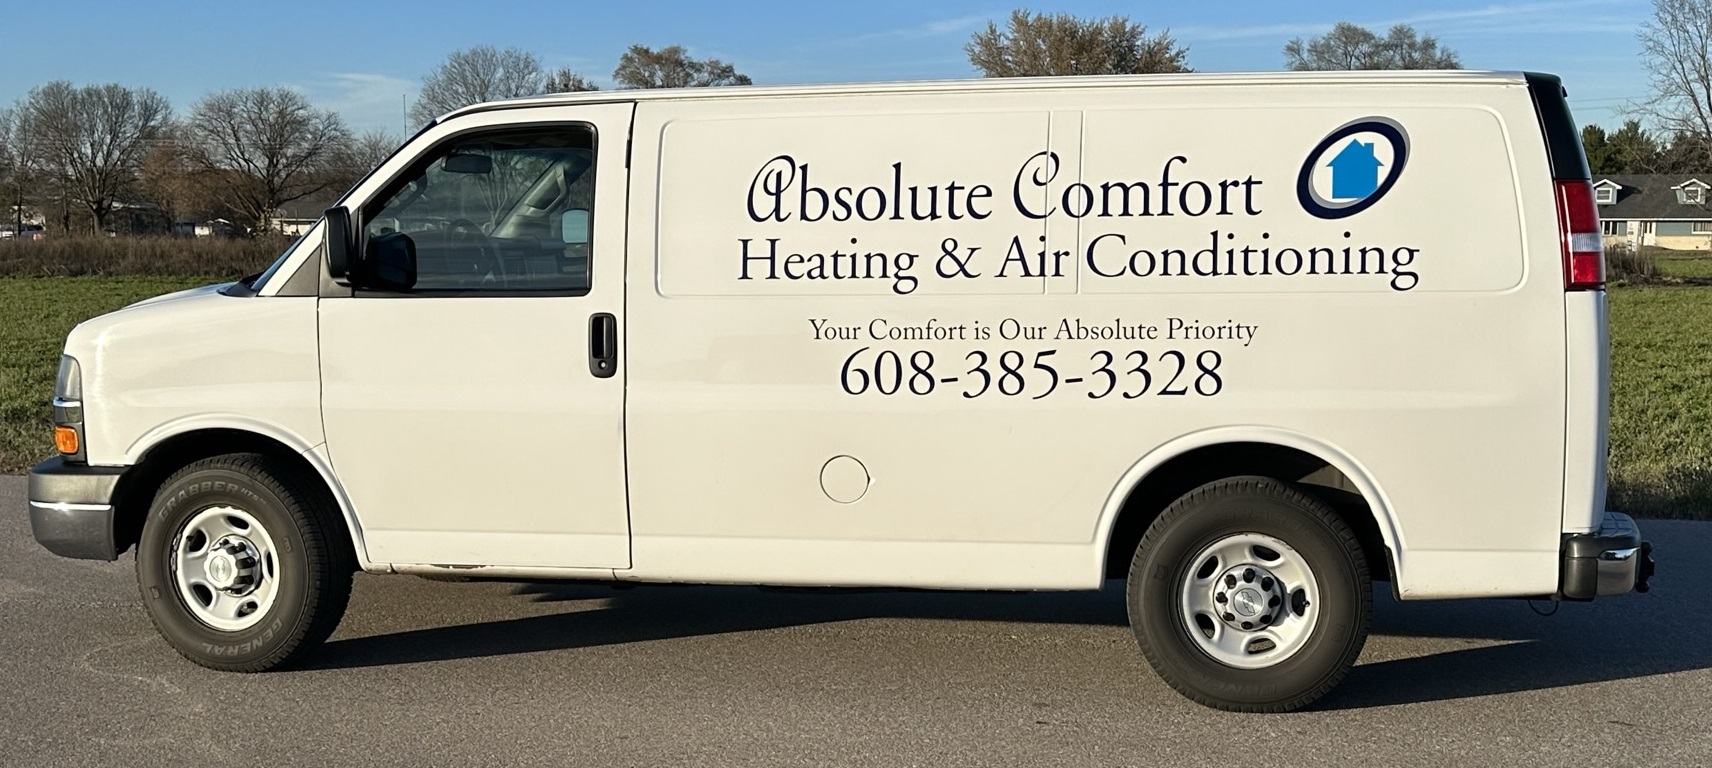 Service van. Absolute Comfort Heating & A/C